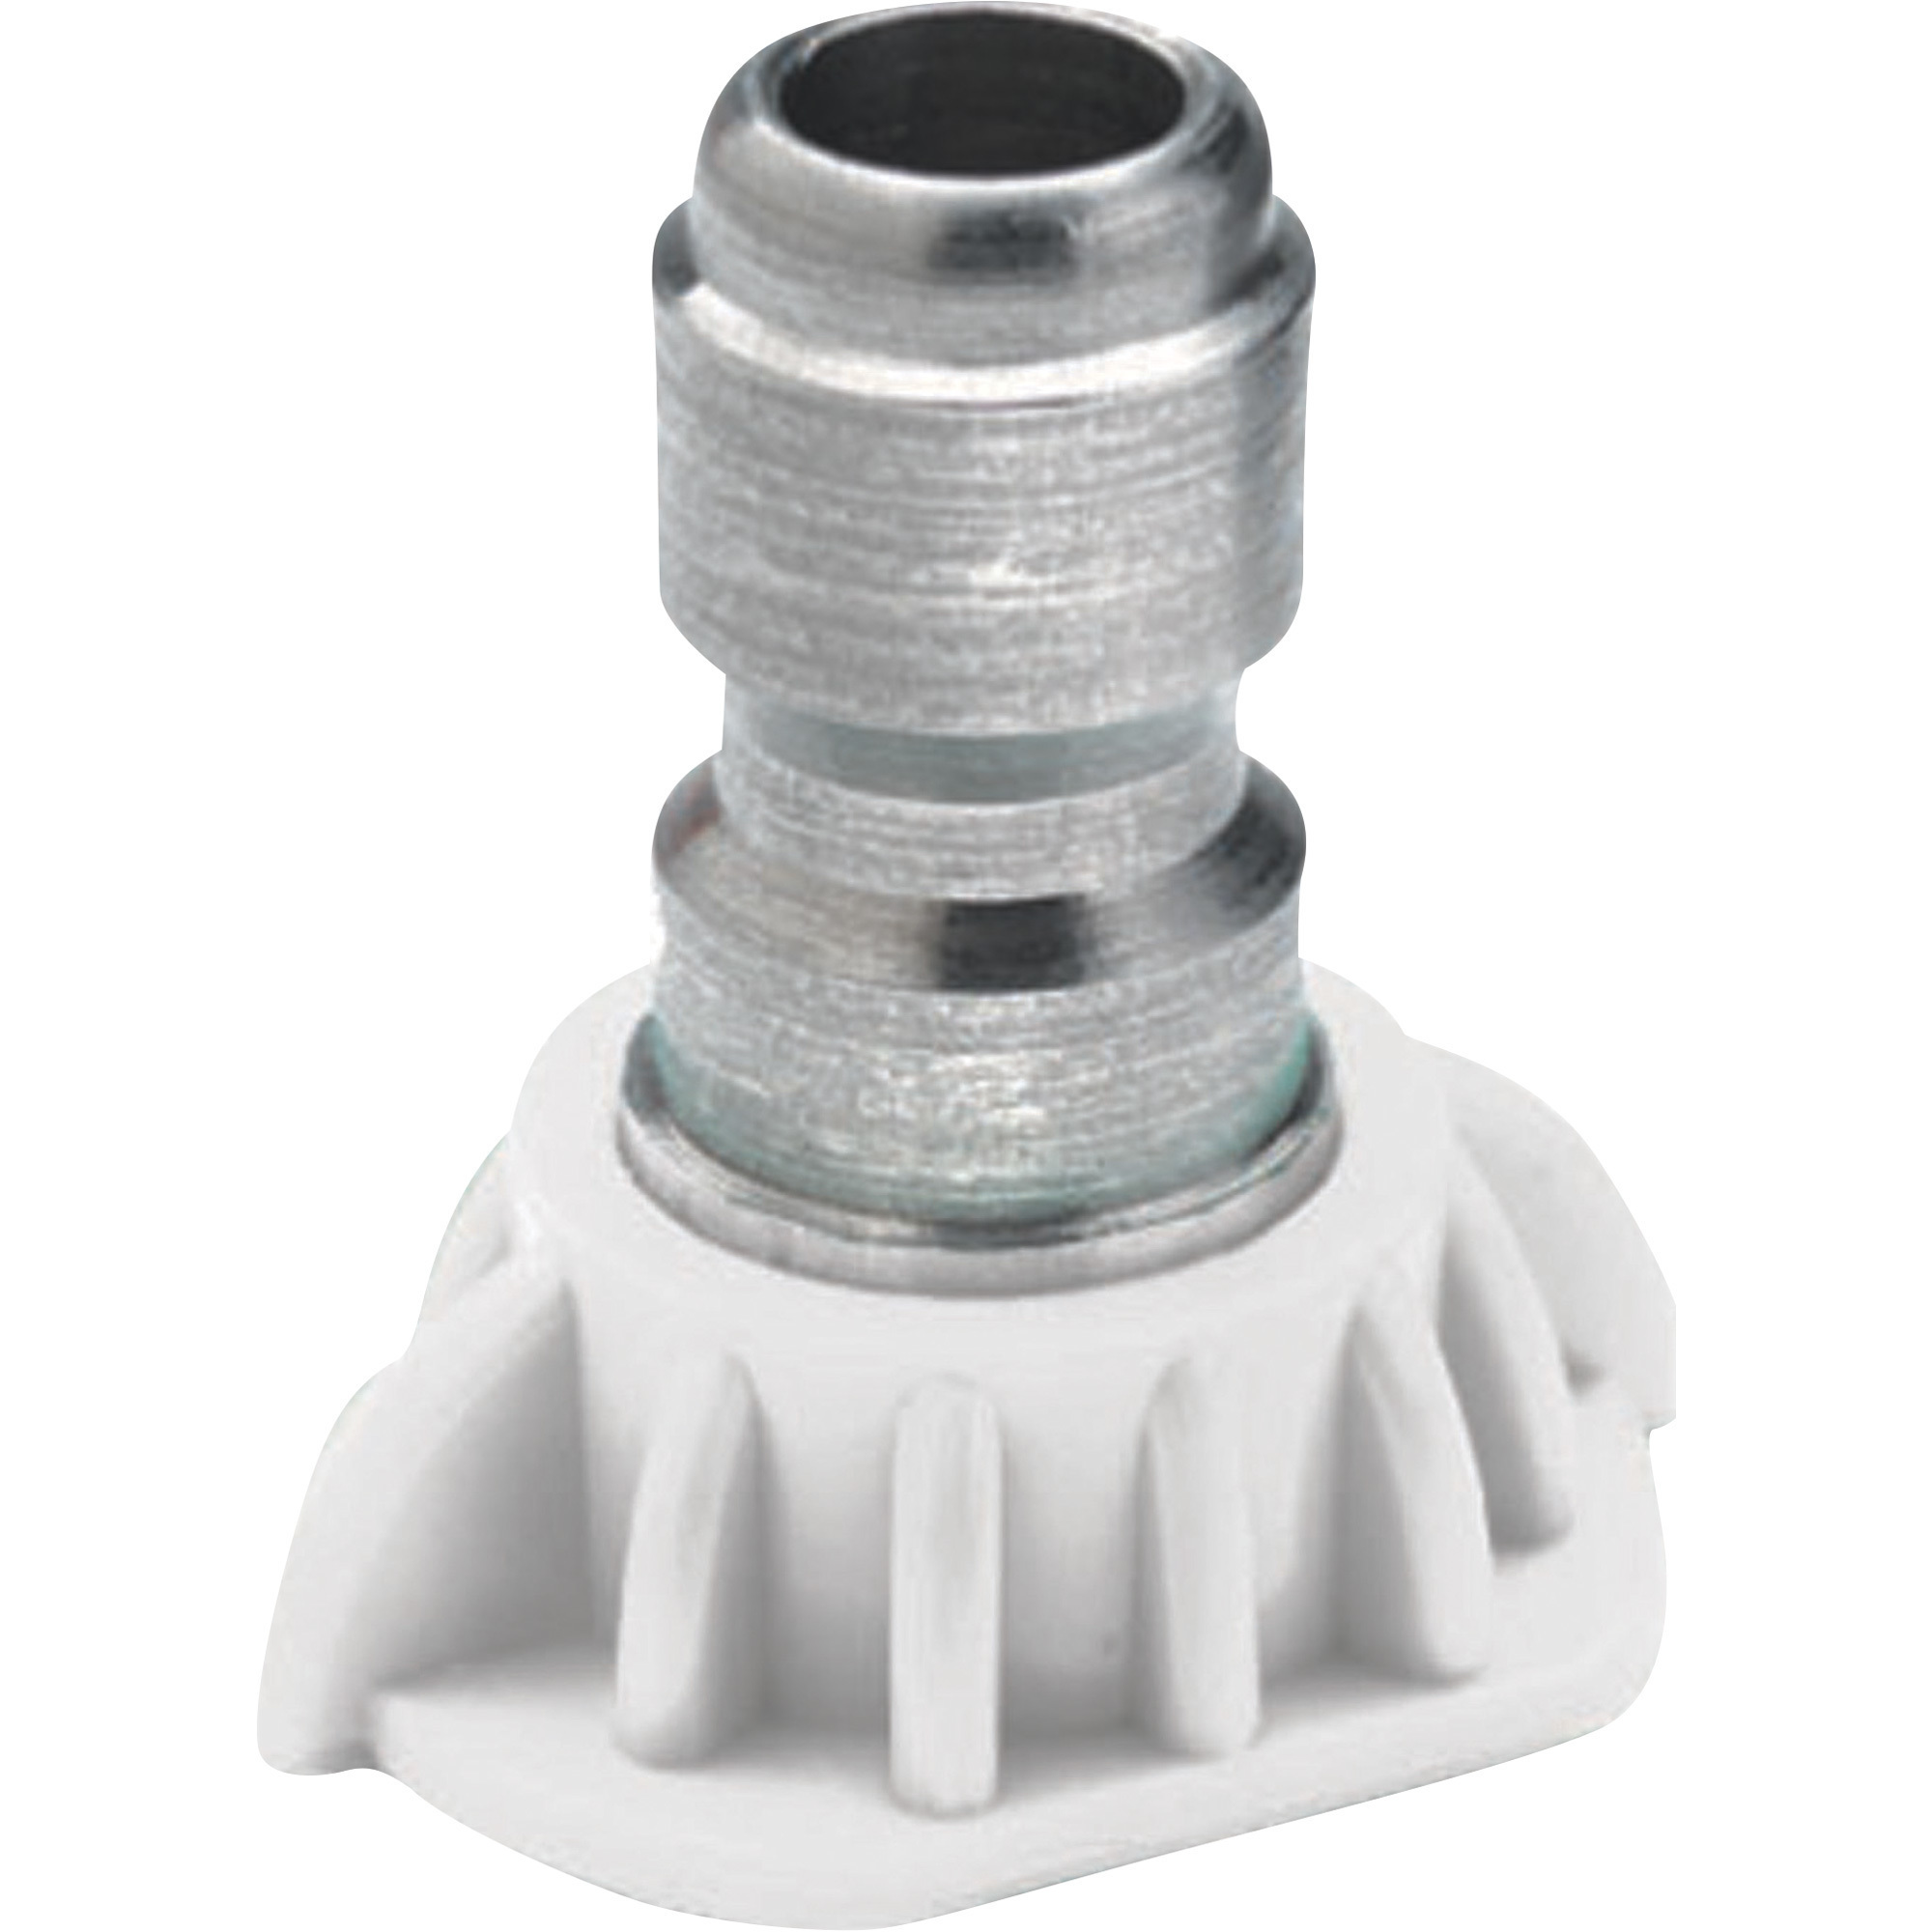 NorthStar Pressure Washer Quick Couple Spray Nozzle â 4.0 Size, 40 Degree Spray, Model N40040QP